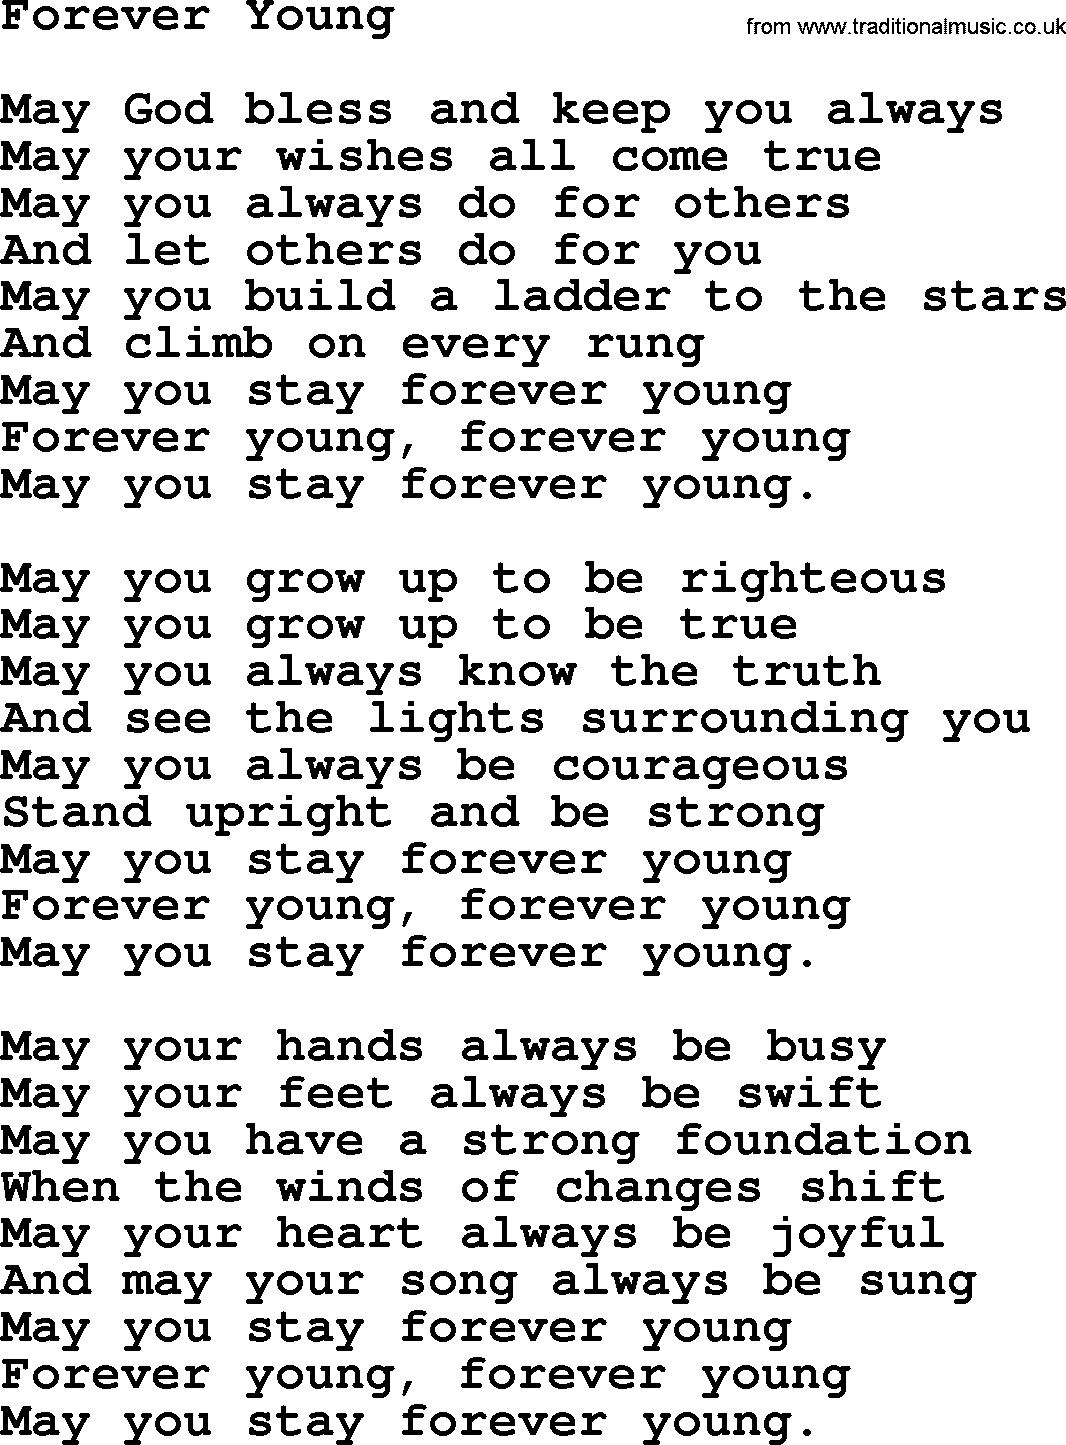 Joan Baez song Forever Young, lyrics